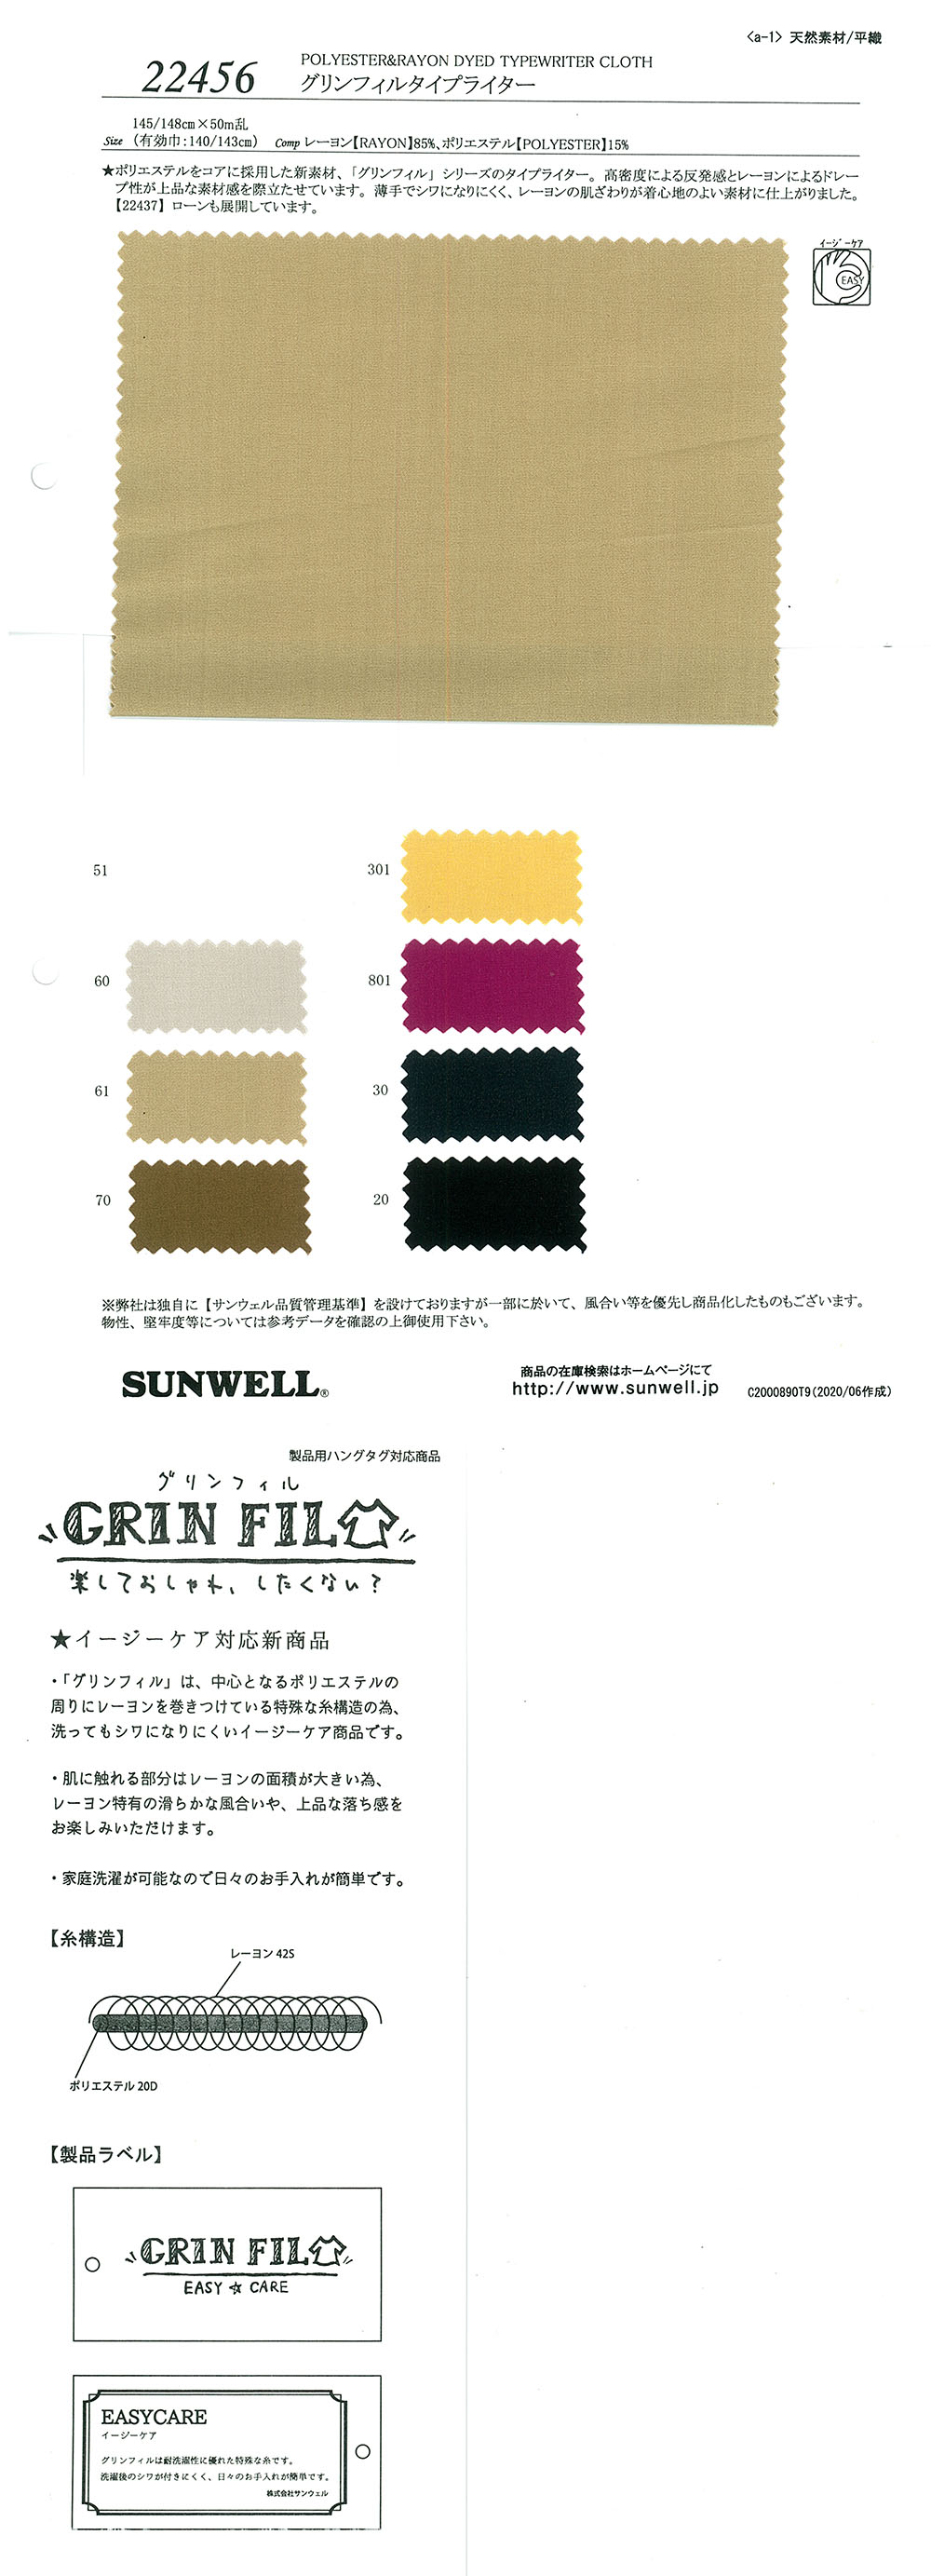 22456 GrinFil高密度平織[面料] SUNWELL